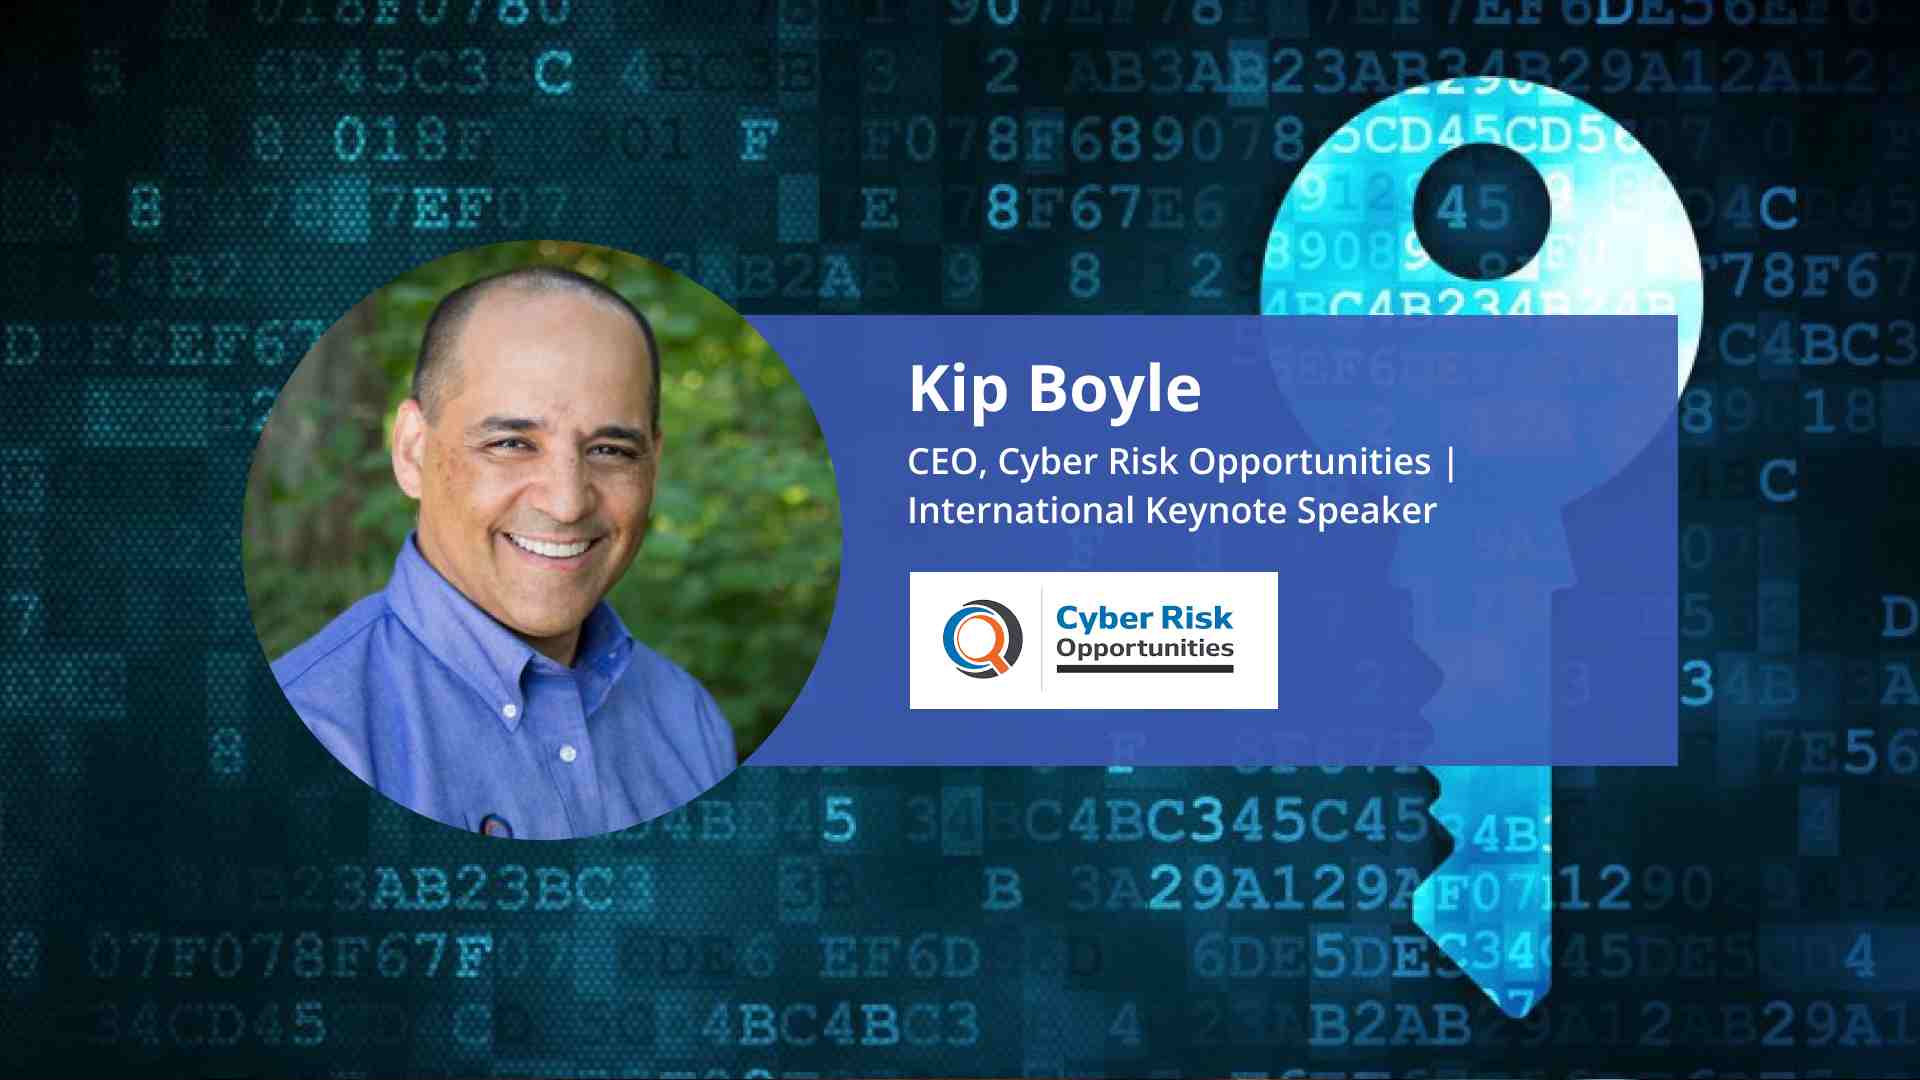 Blue Ocean Global Technology Interviews CEO Kip Boyle of Cyber Risk Opportunities, LLC